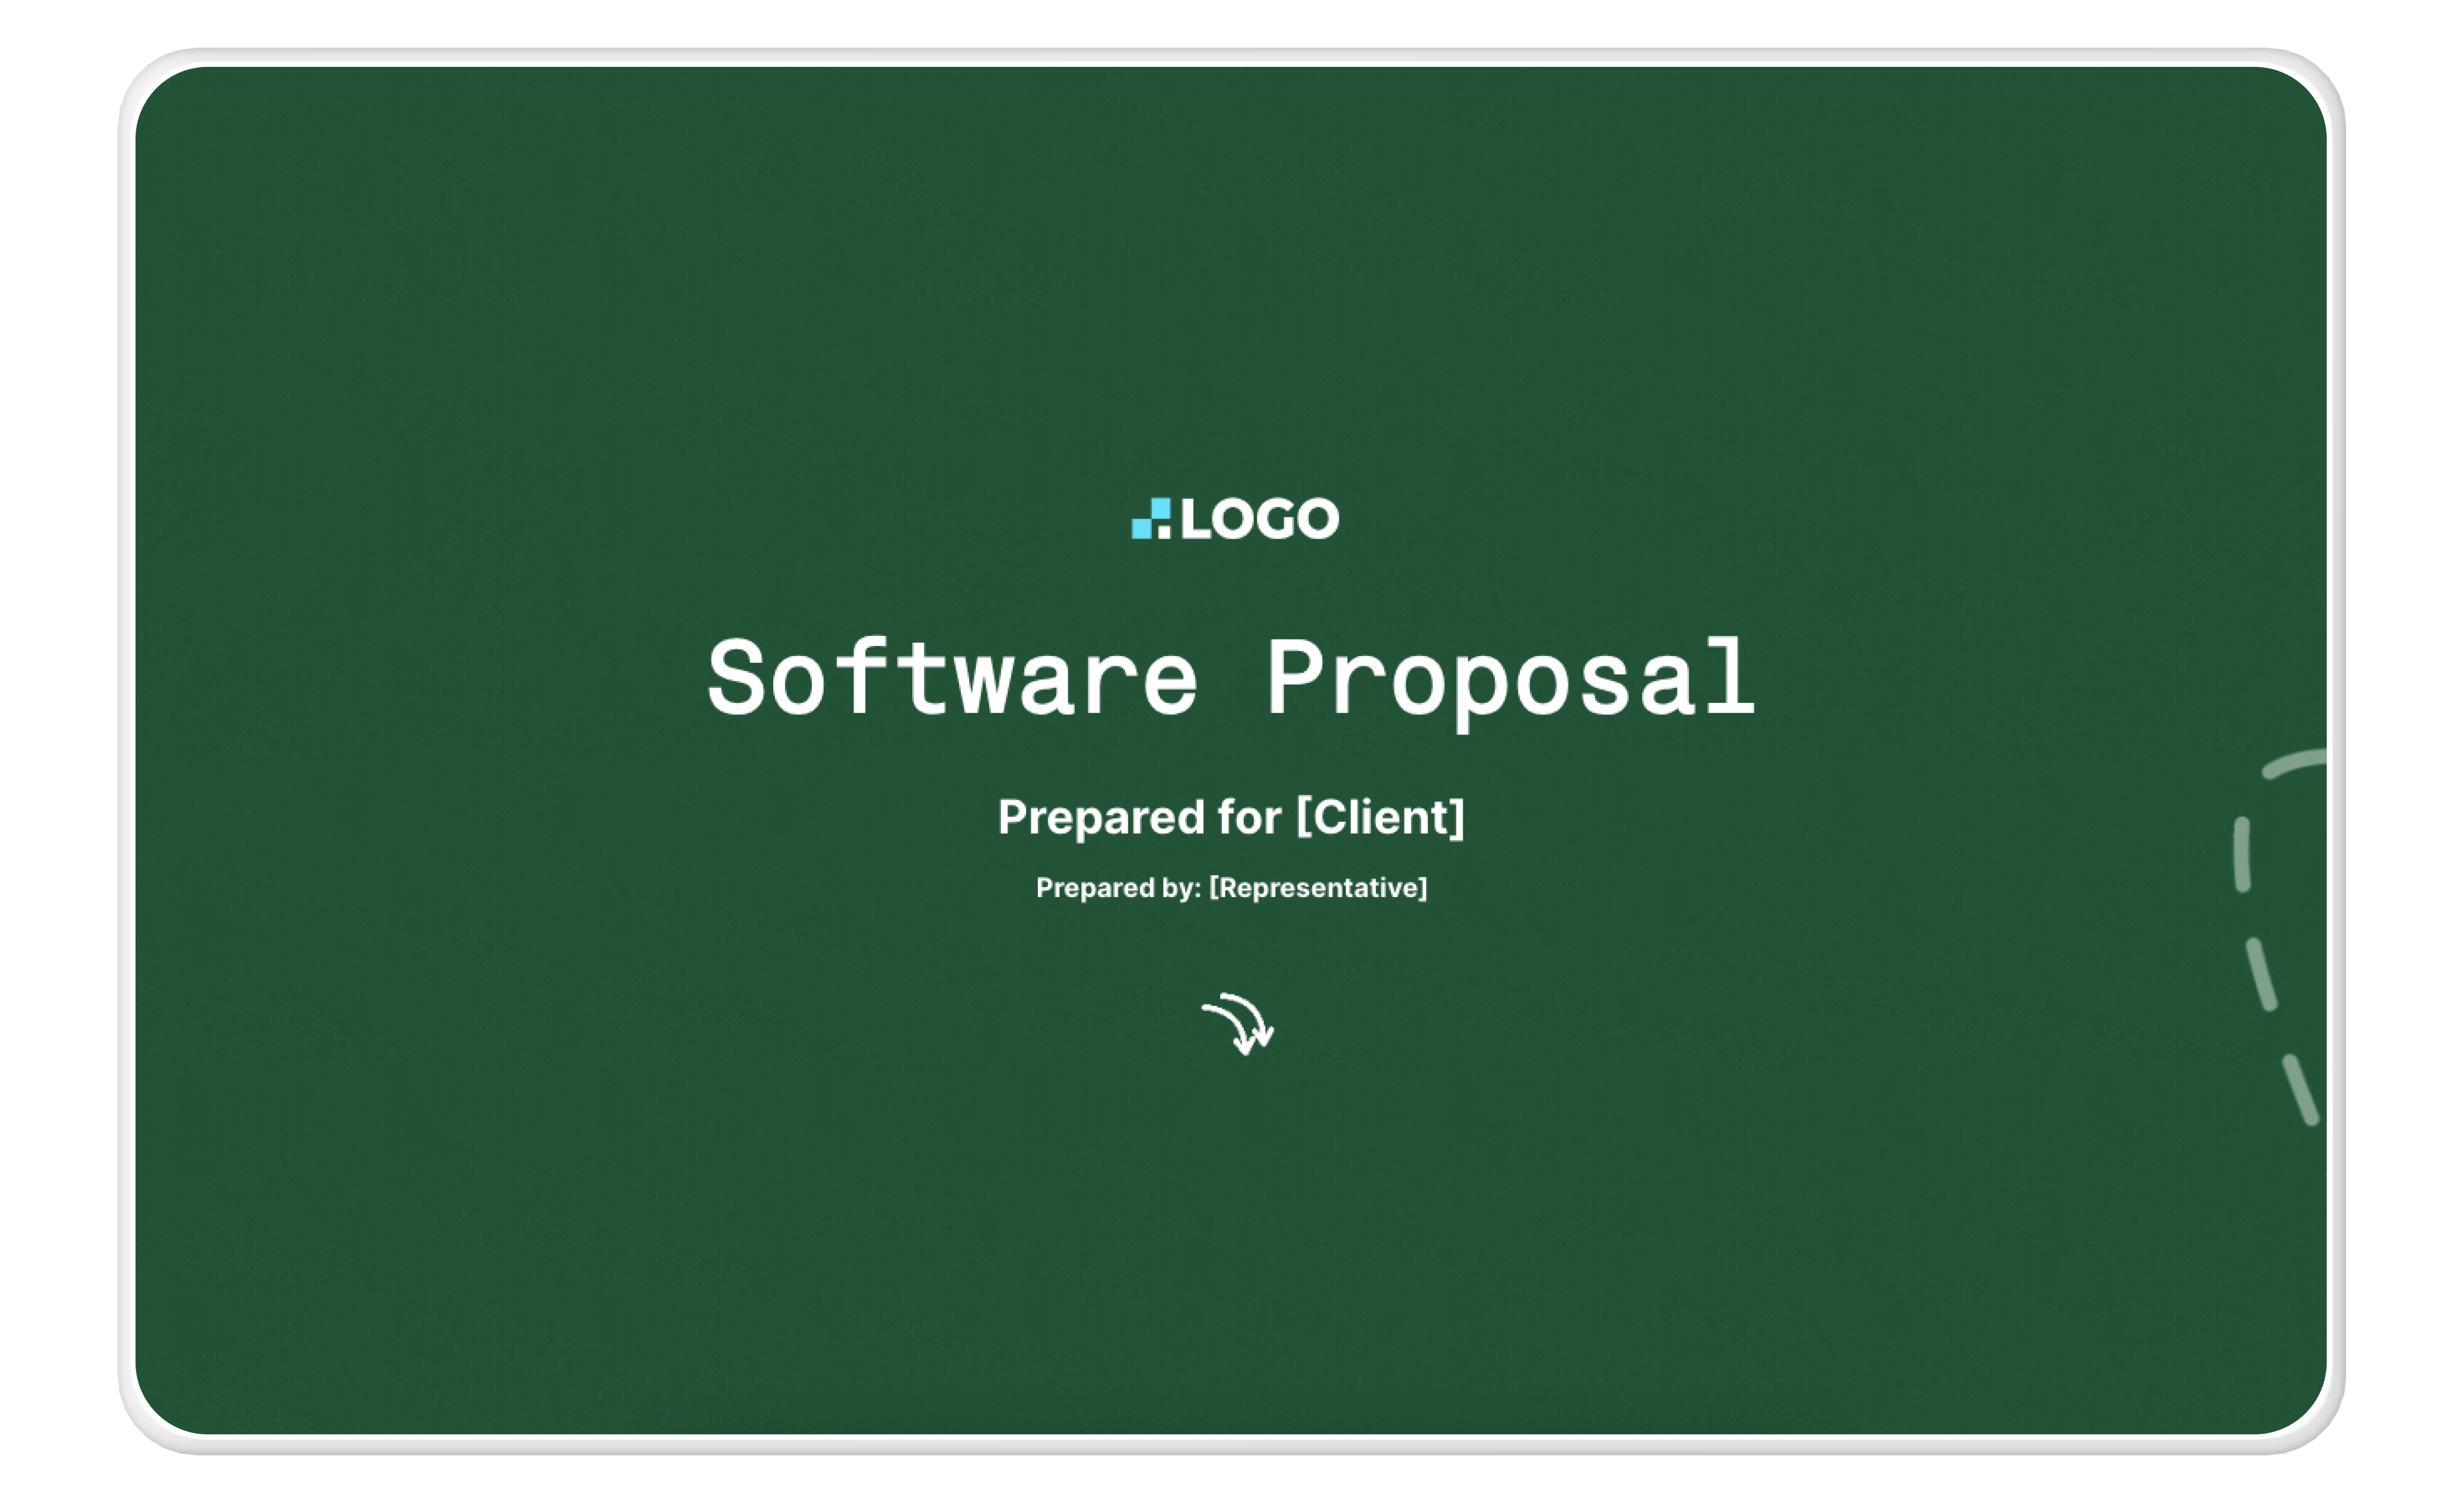 A screenshot of Qwilr's Software Proposal